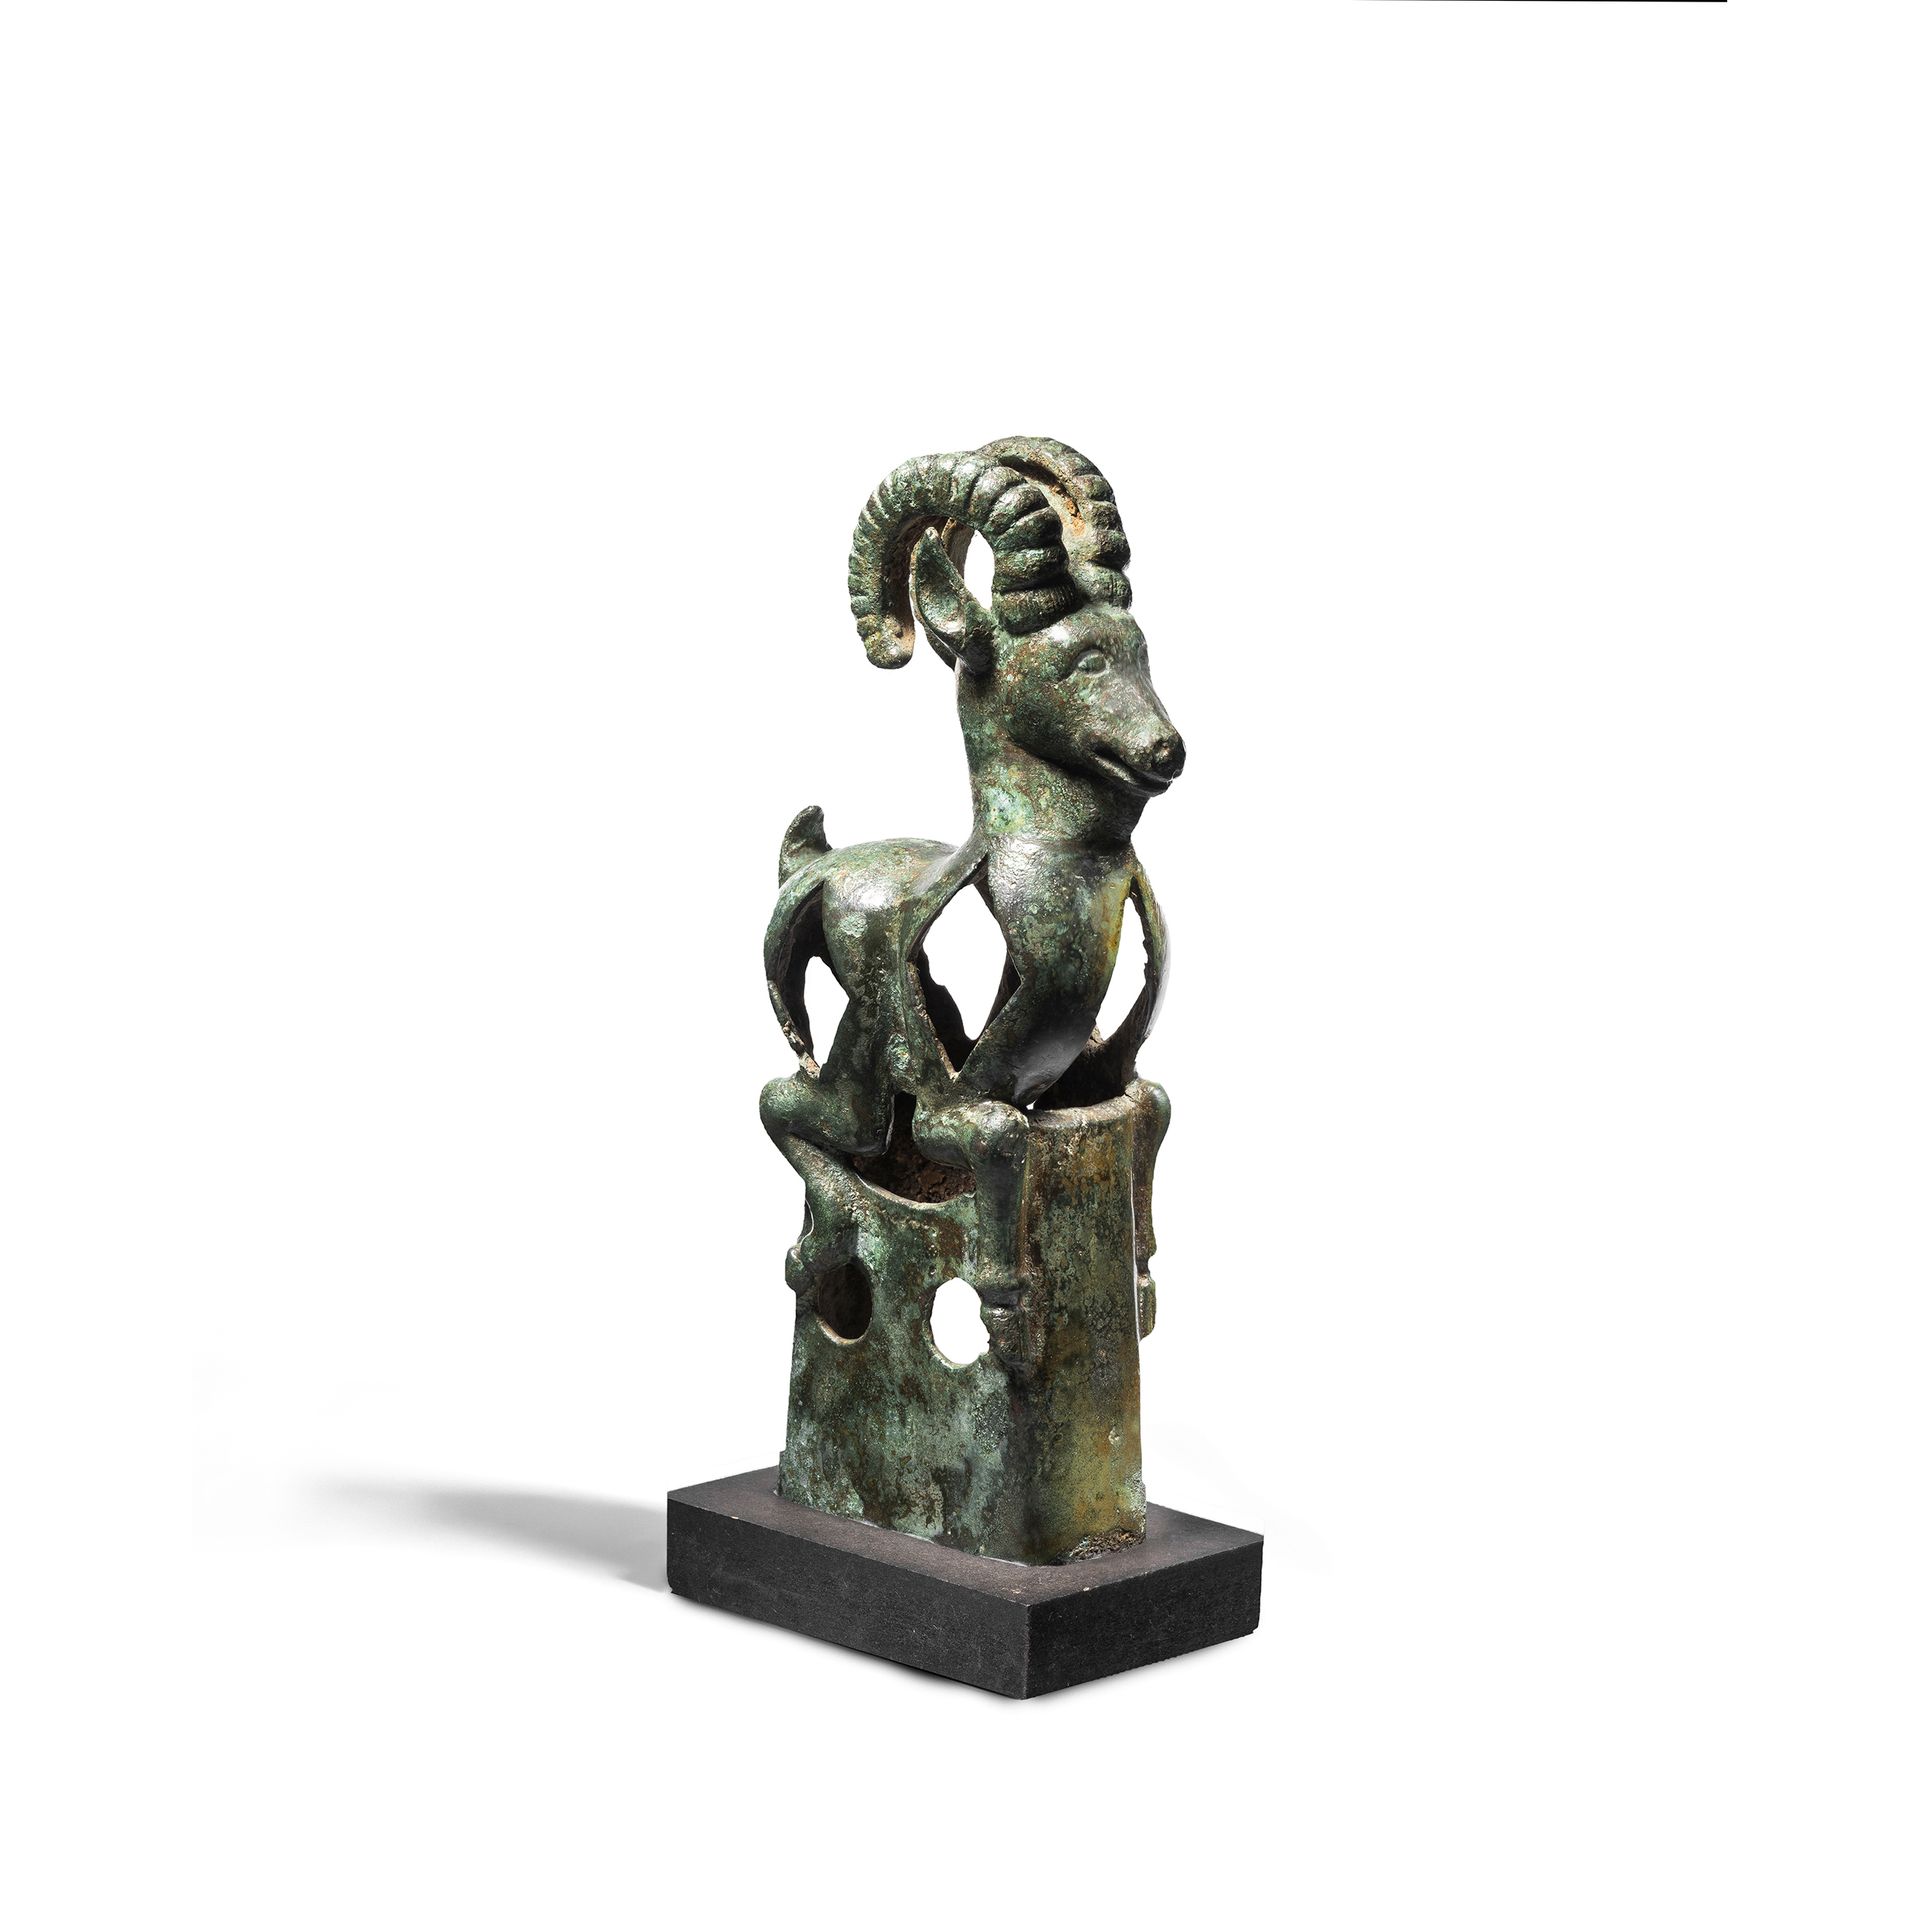 Null 伊比利亚人的终端
带有绿色铜锈的青铜器
H.20.5厘米 
土库曼斯坦，青铜时代晚期，公元前一千年后半期 

平行
吉美博物馆，Inv.3410，内蒙&hellip;